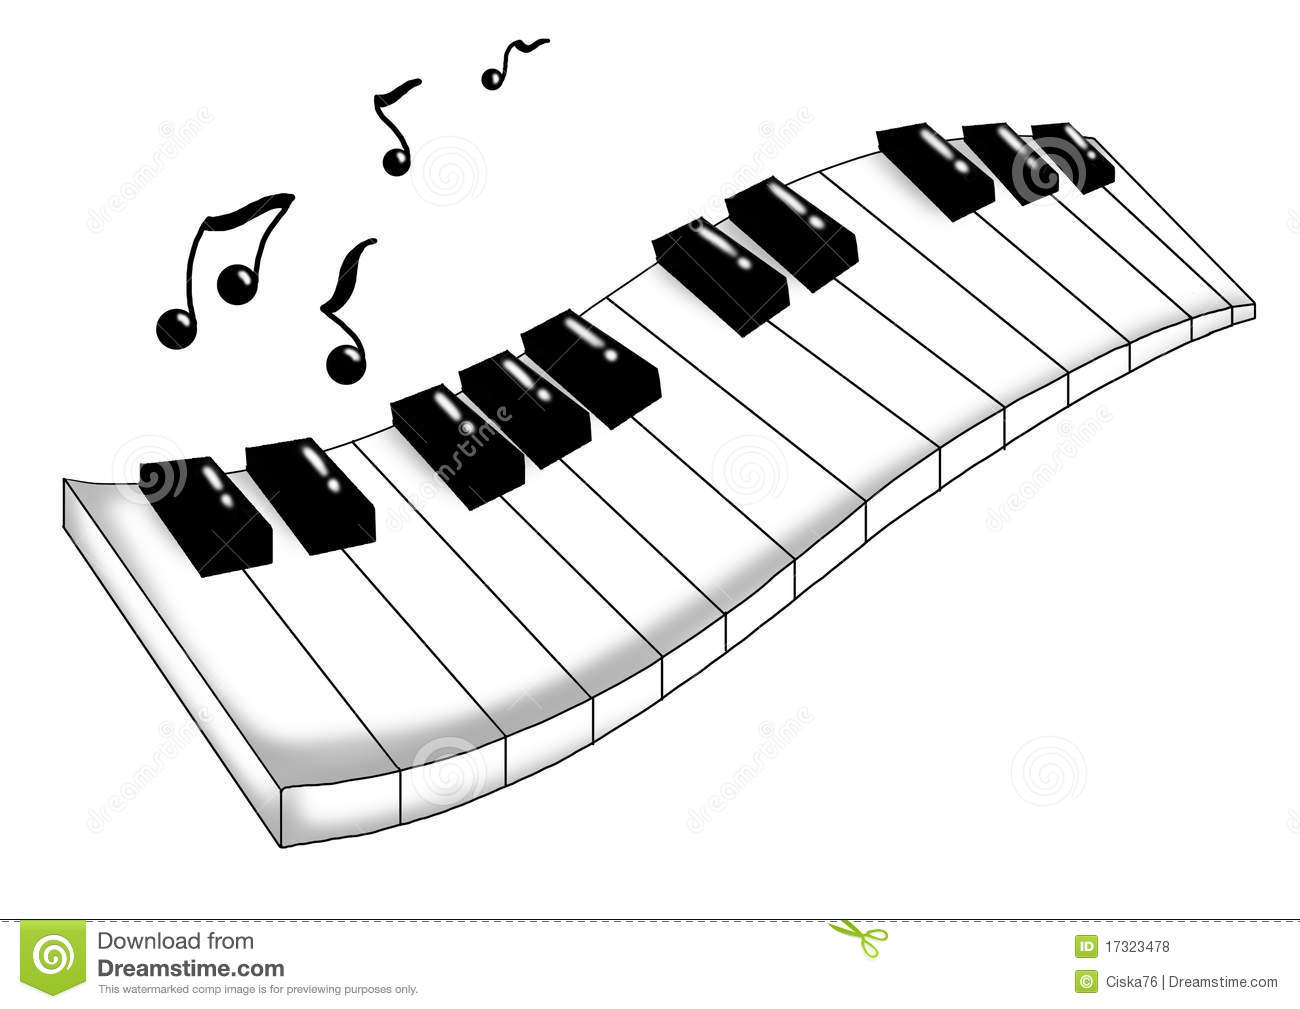 Music Keyboard Clipart.